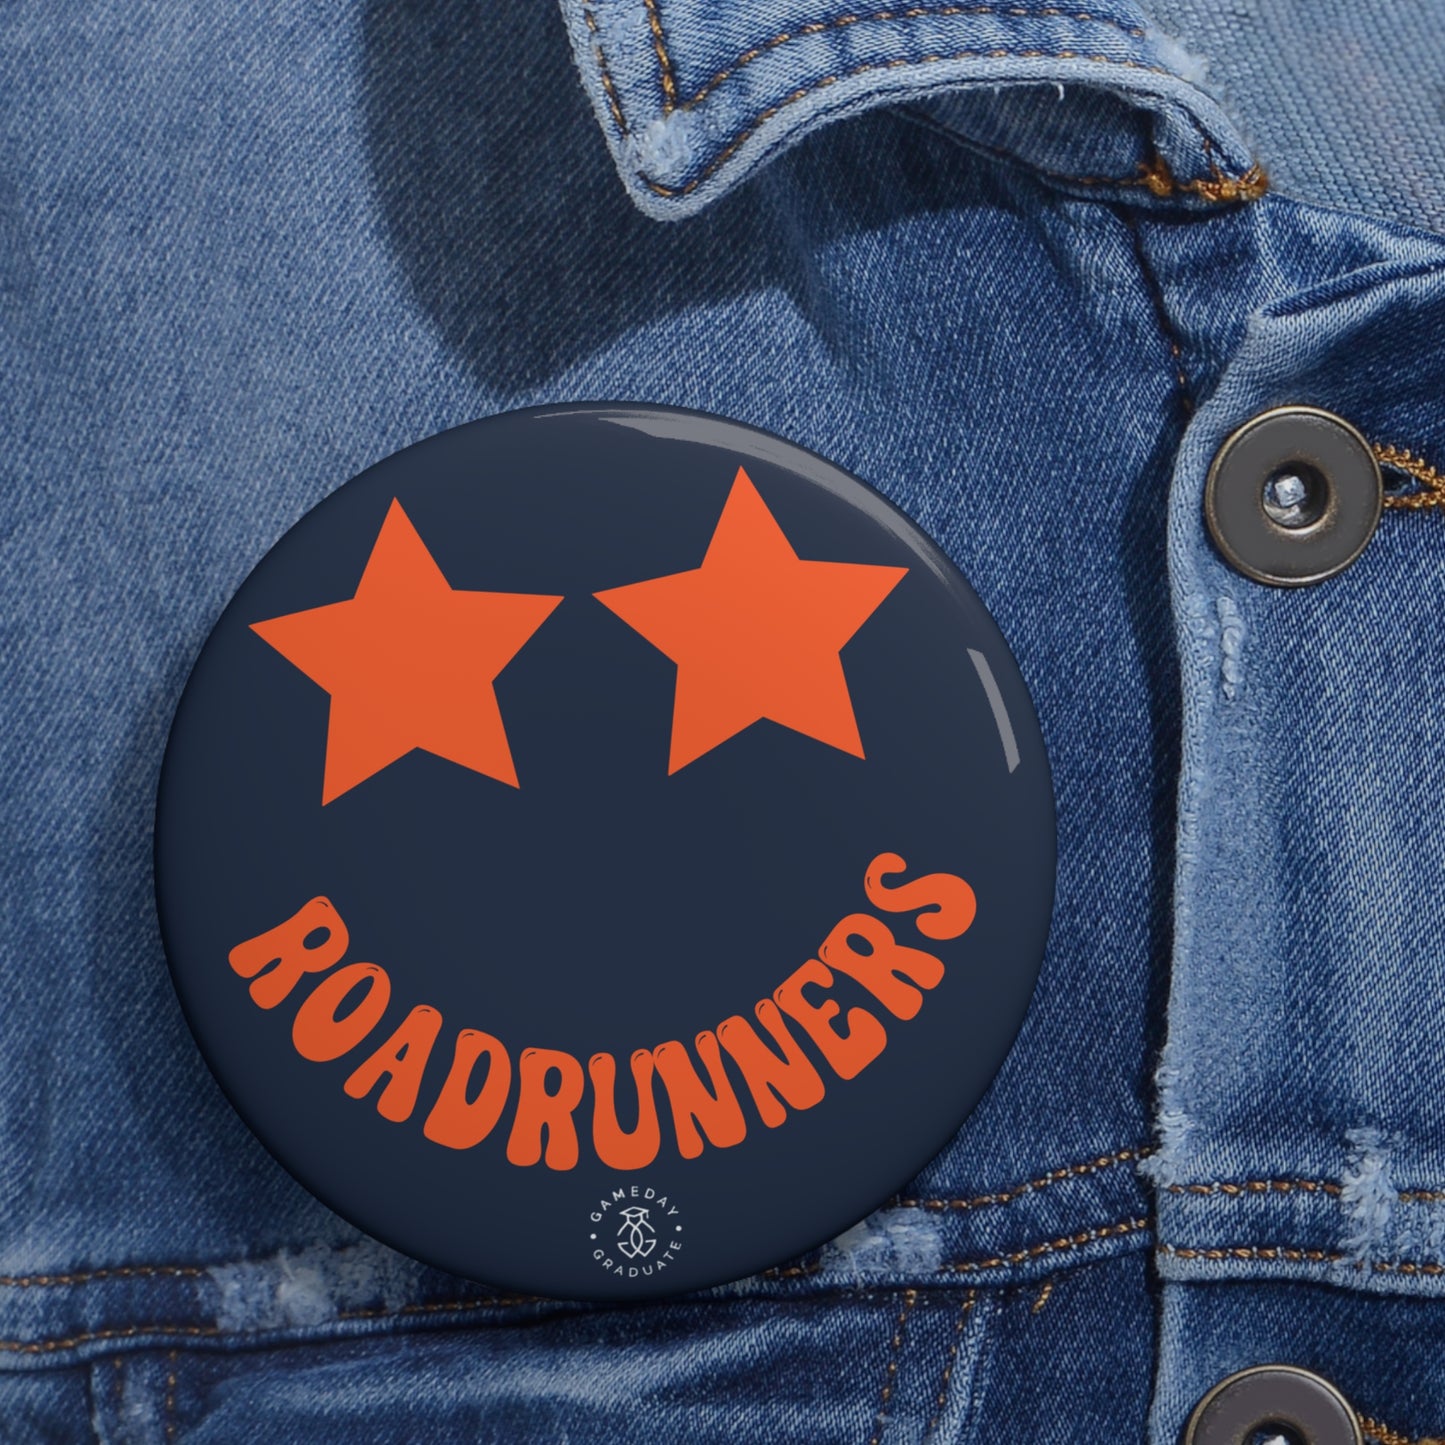 Roadrunners Stars Button